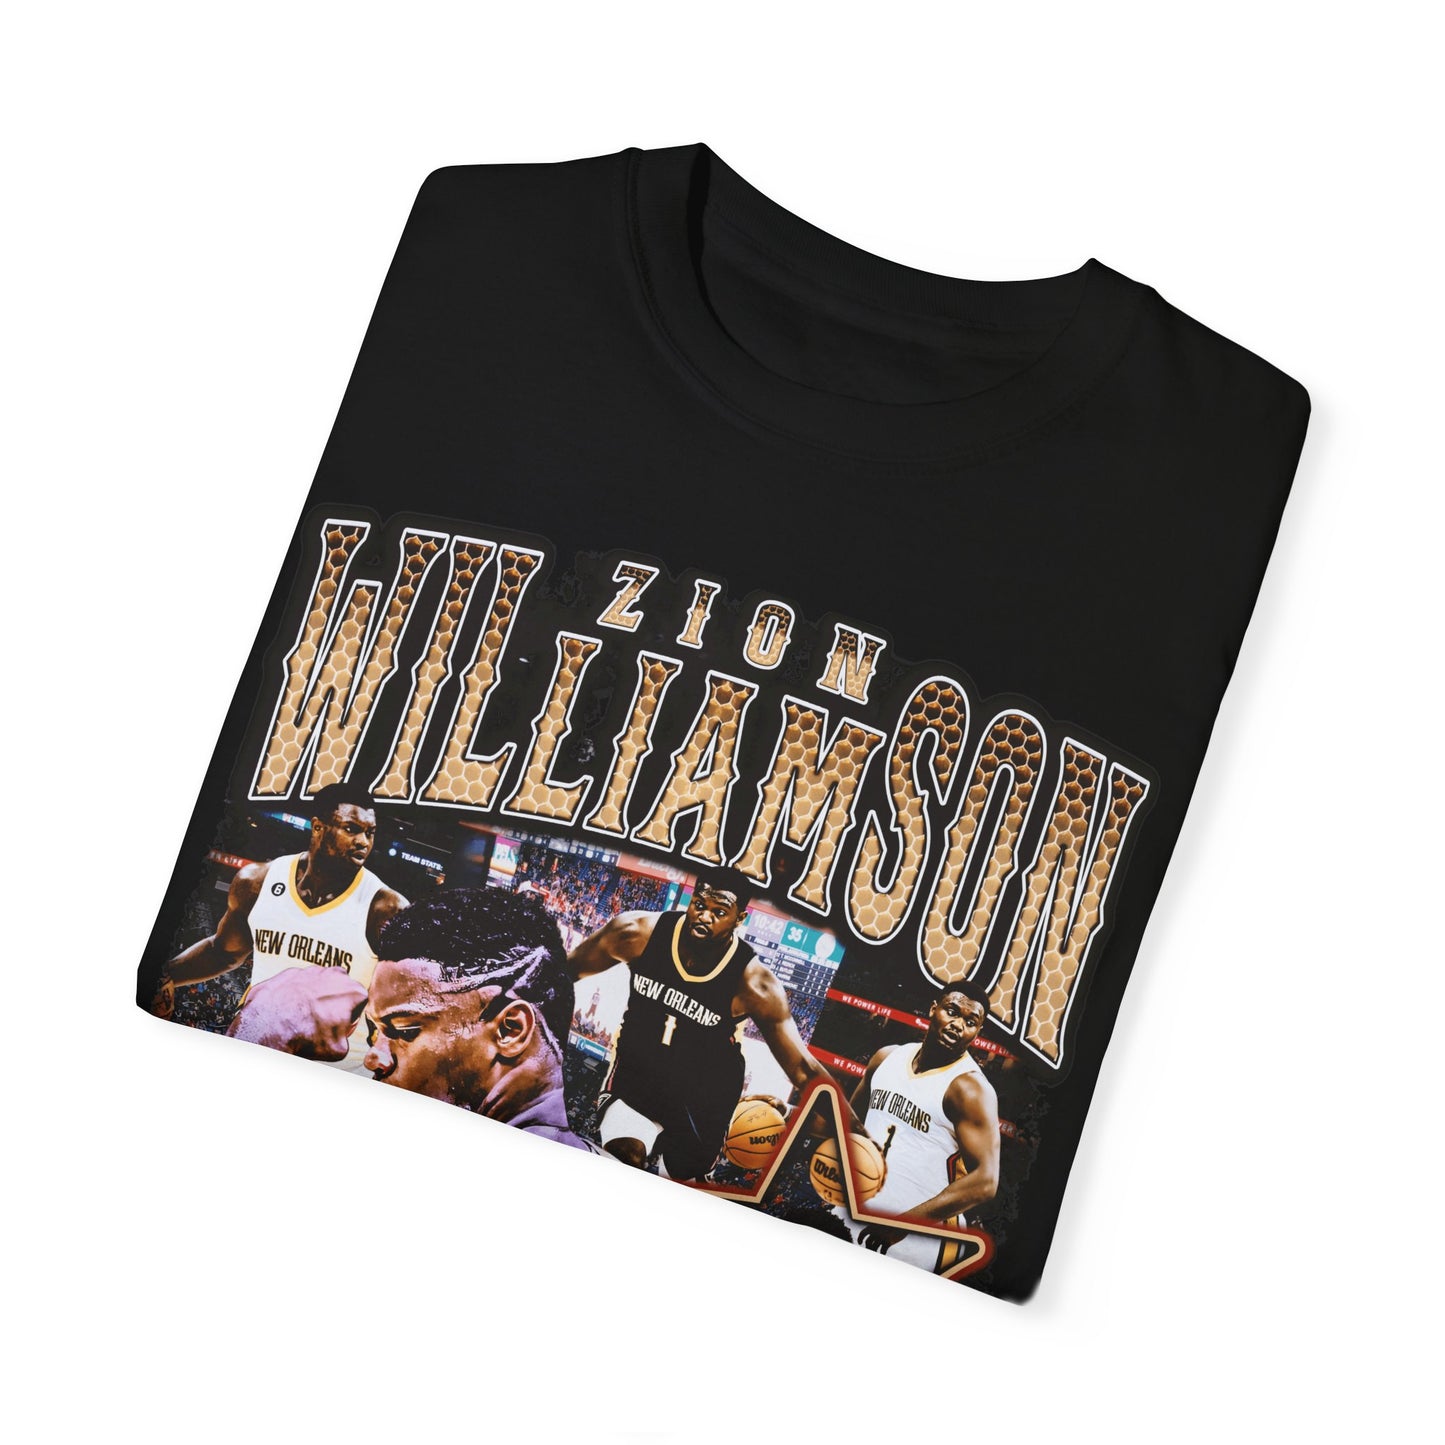 WIY x Williamson Vintage T-Shirt